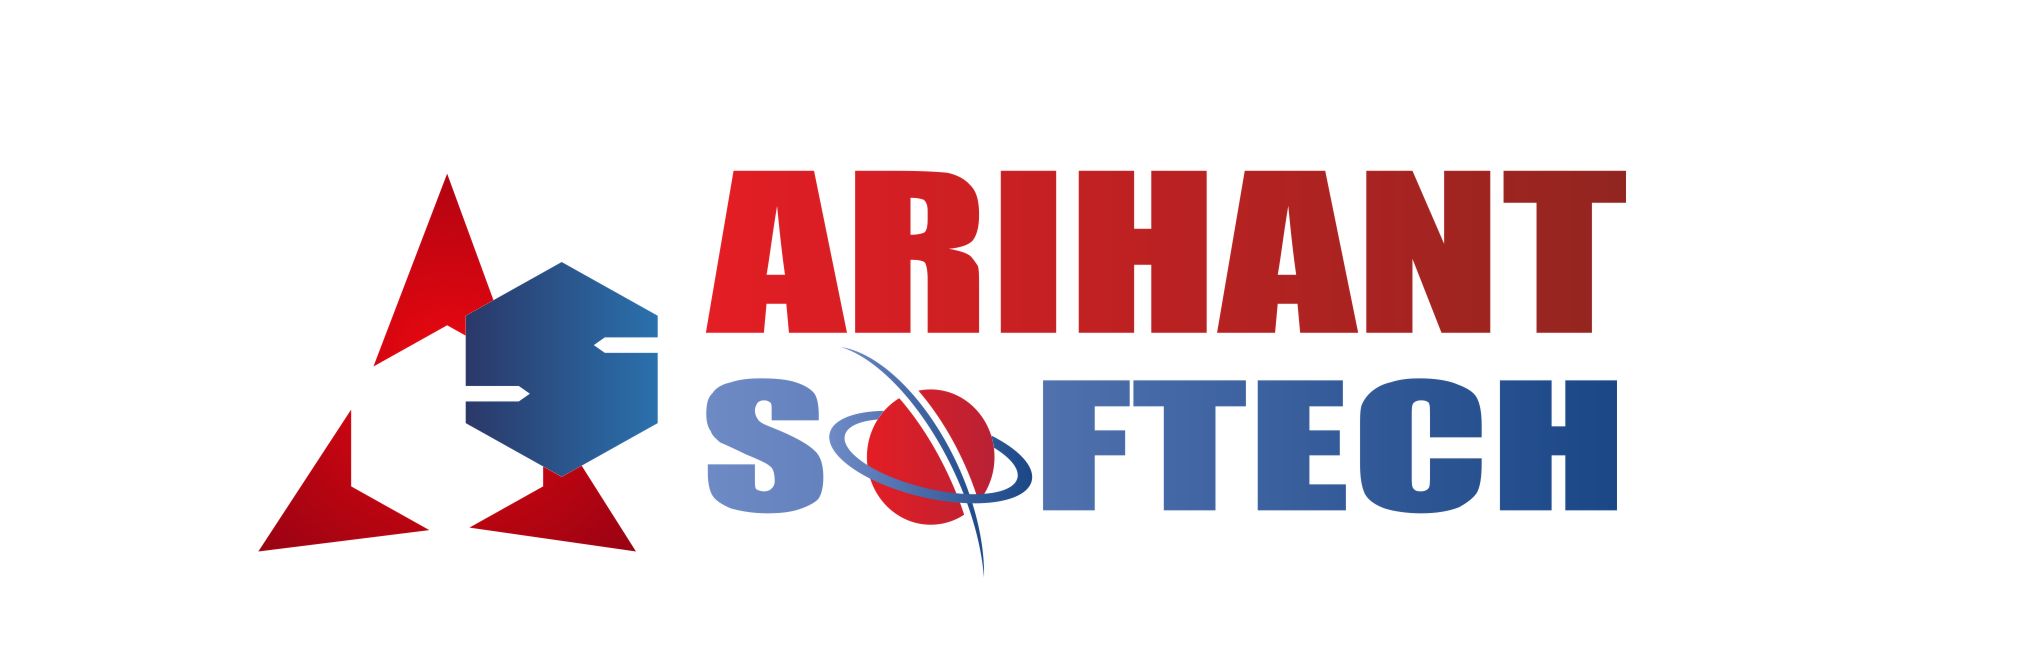 Arihant Softech Logo